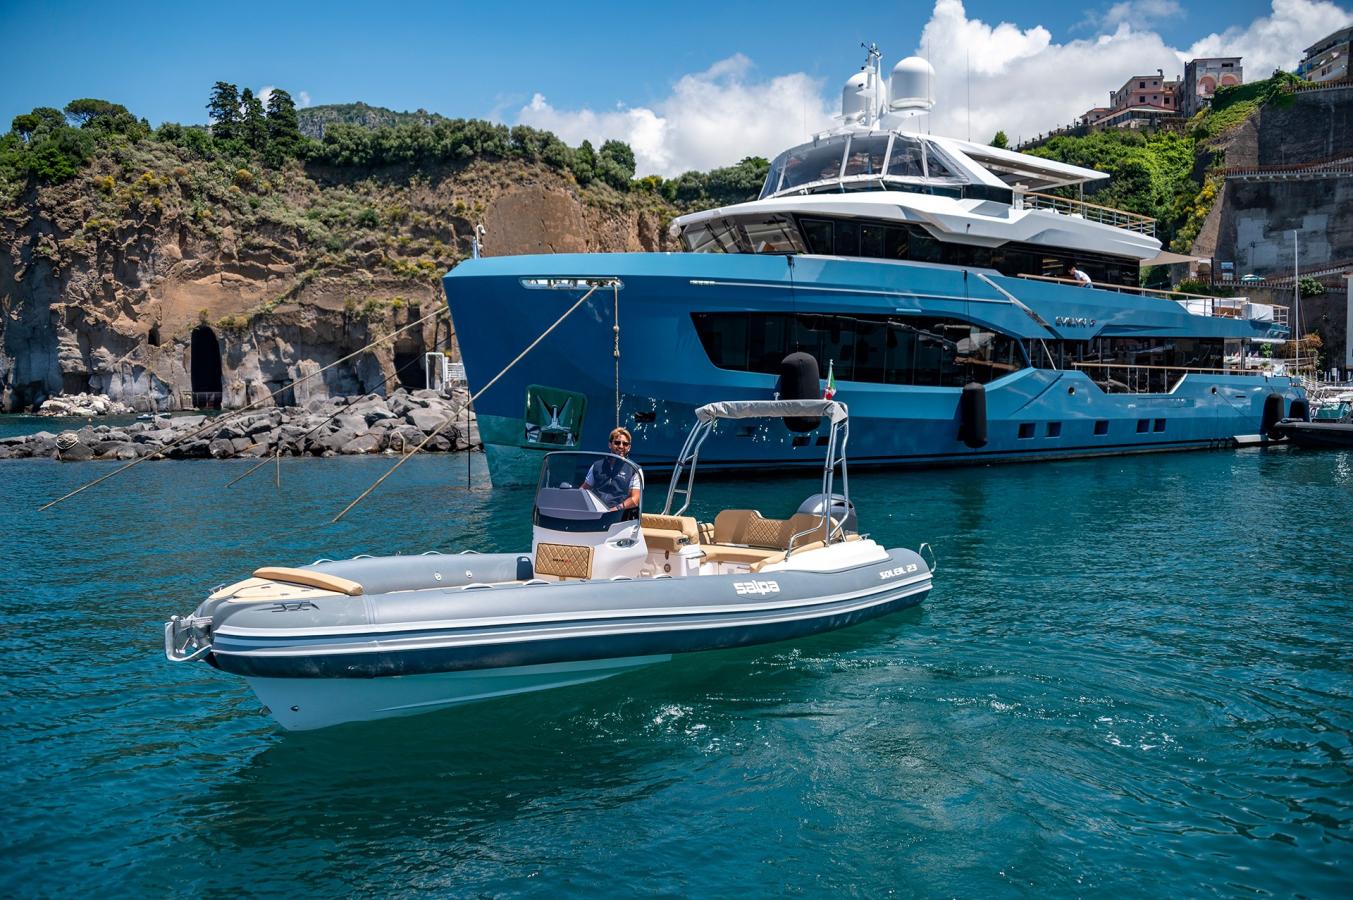 Servizio tender per mega yacht